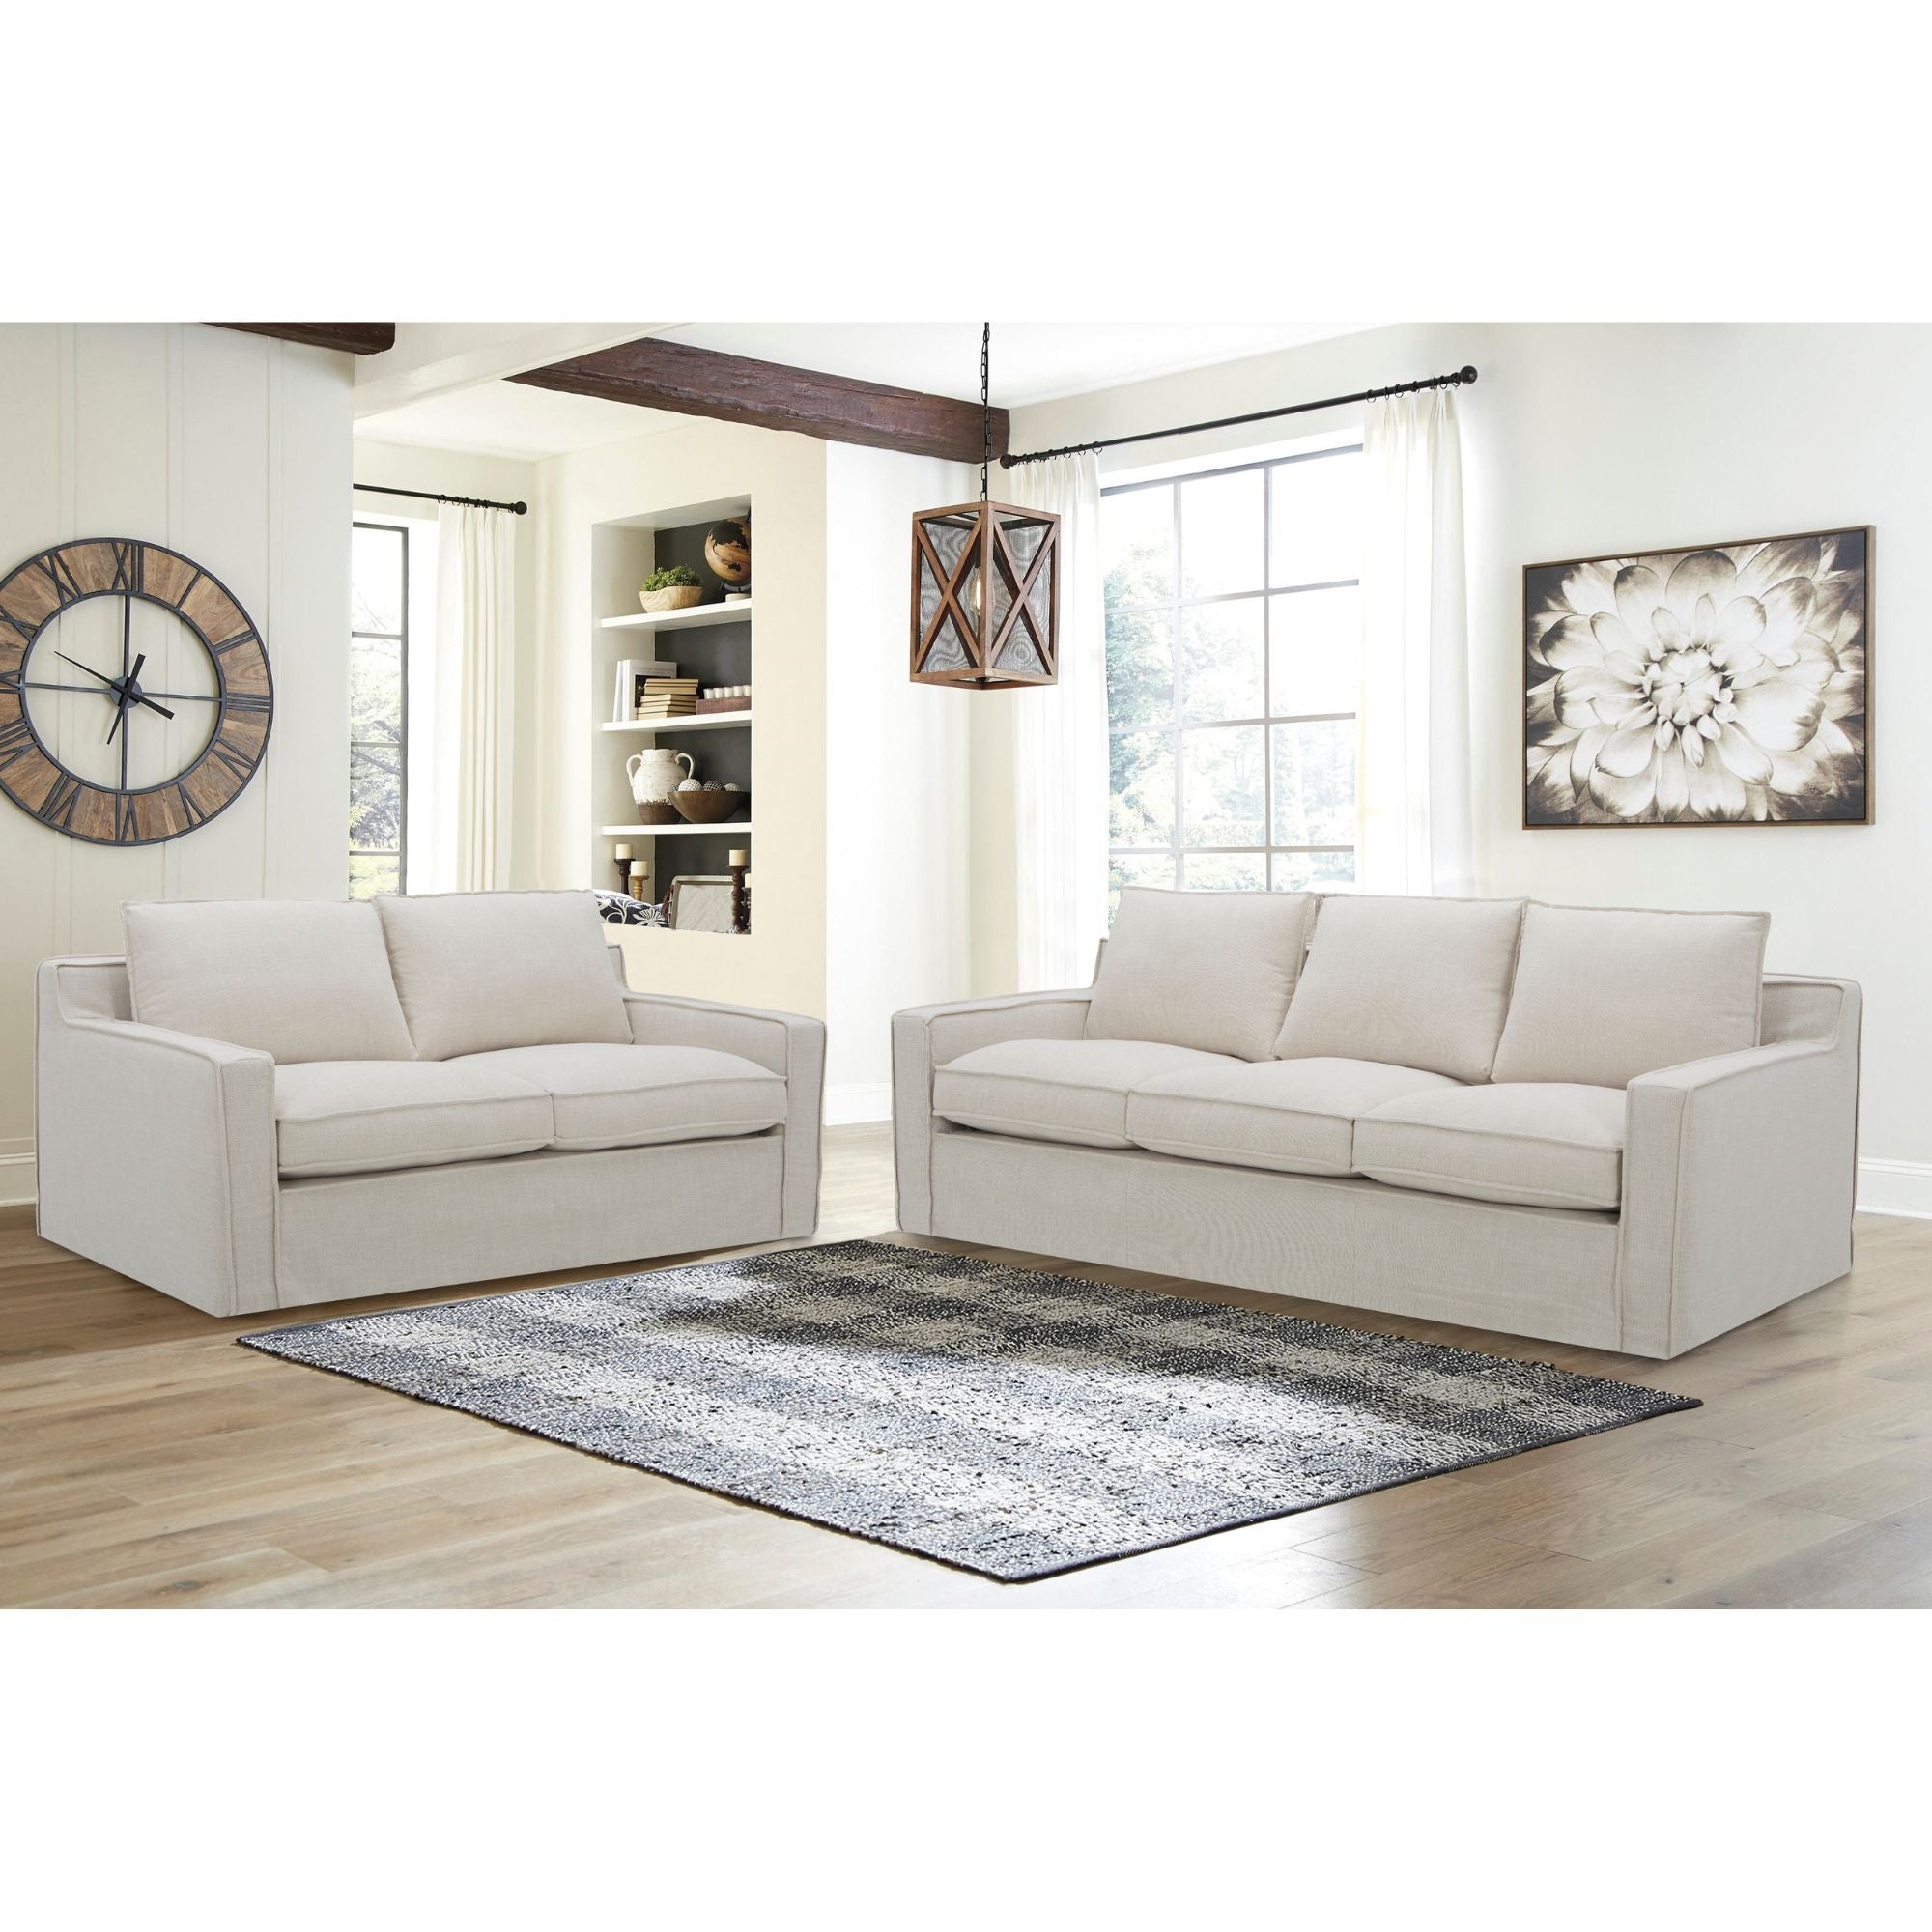 Plushy 2 + 3 Seater Sofa Set Fabric Uplholstered Lounge Couch - Stone